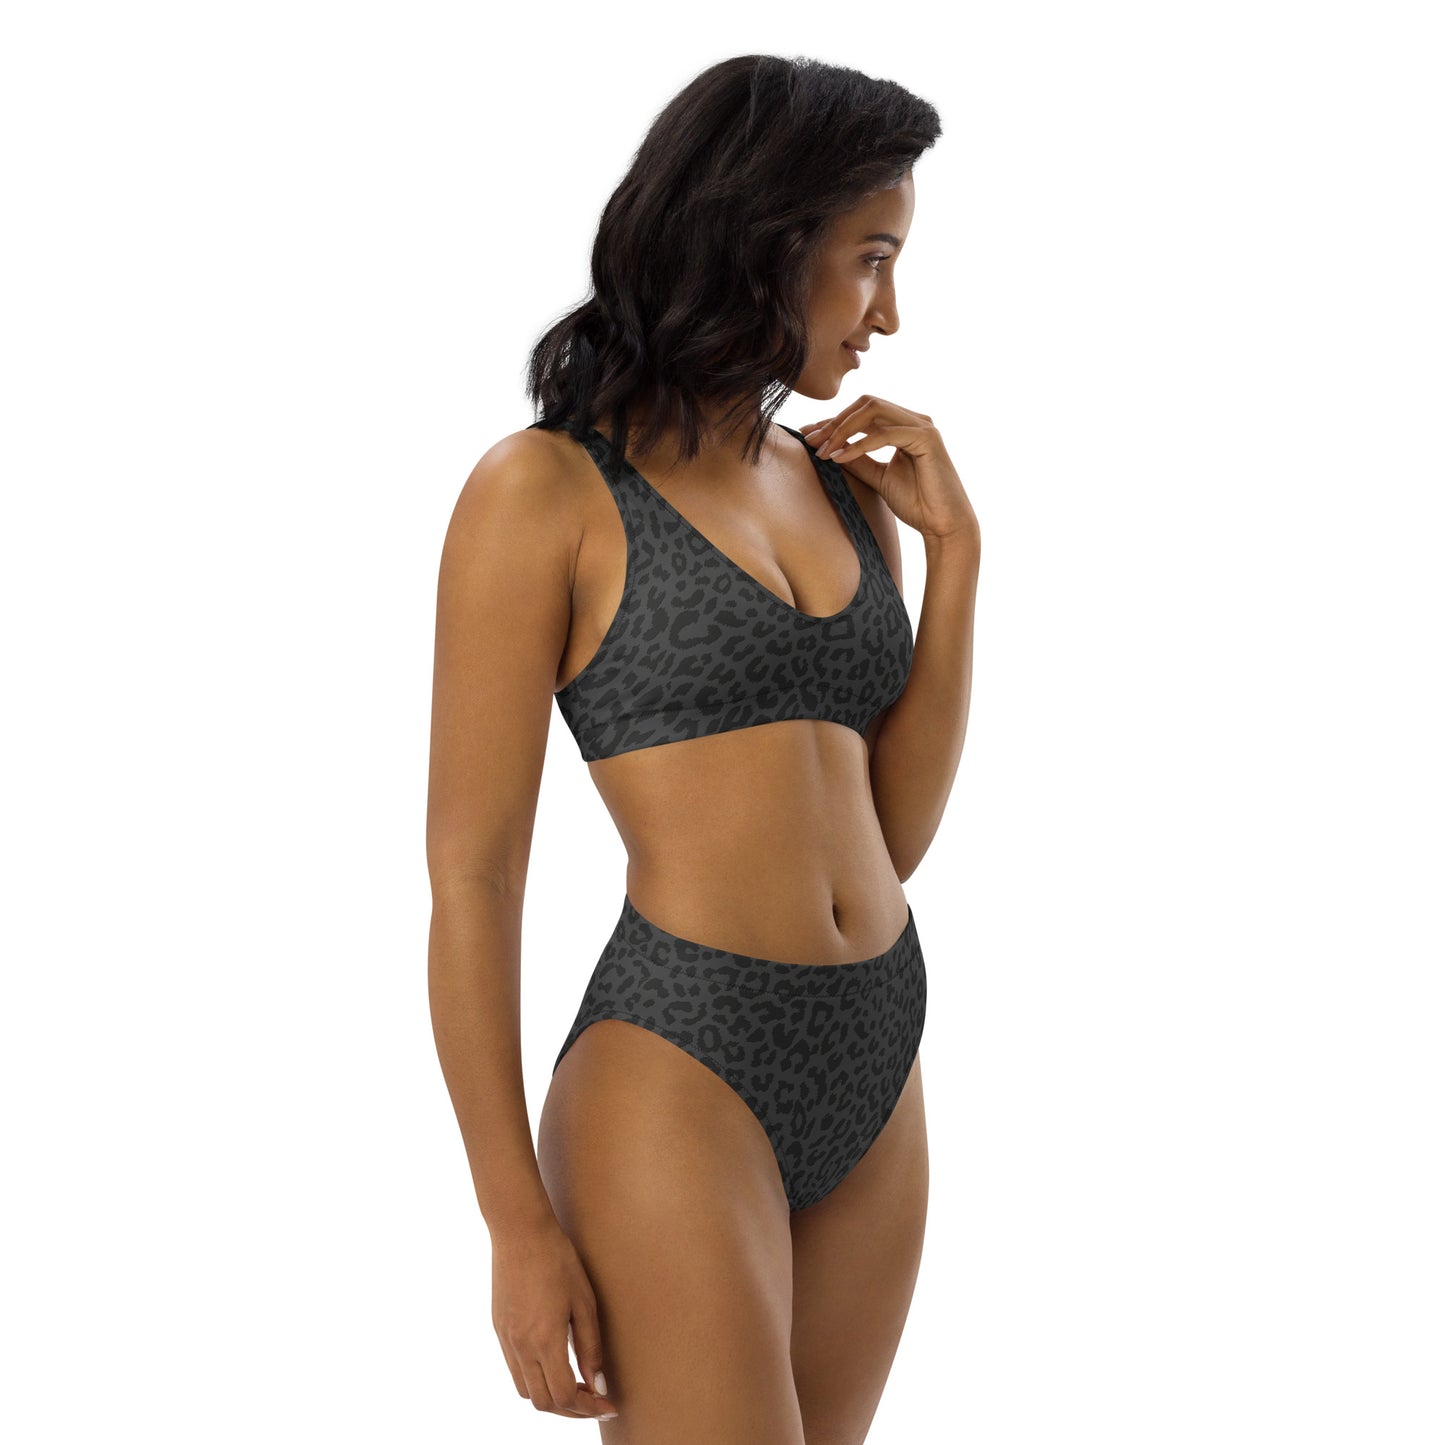 Gray Cheetah Print Eco Friendly Bikini Top w/ Removable Padding